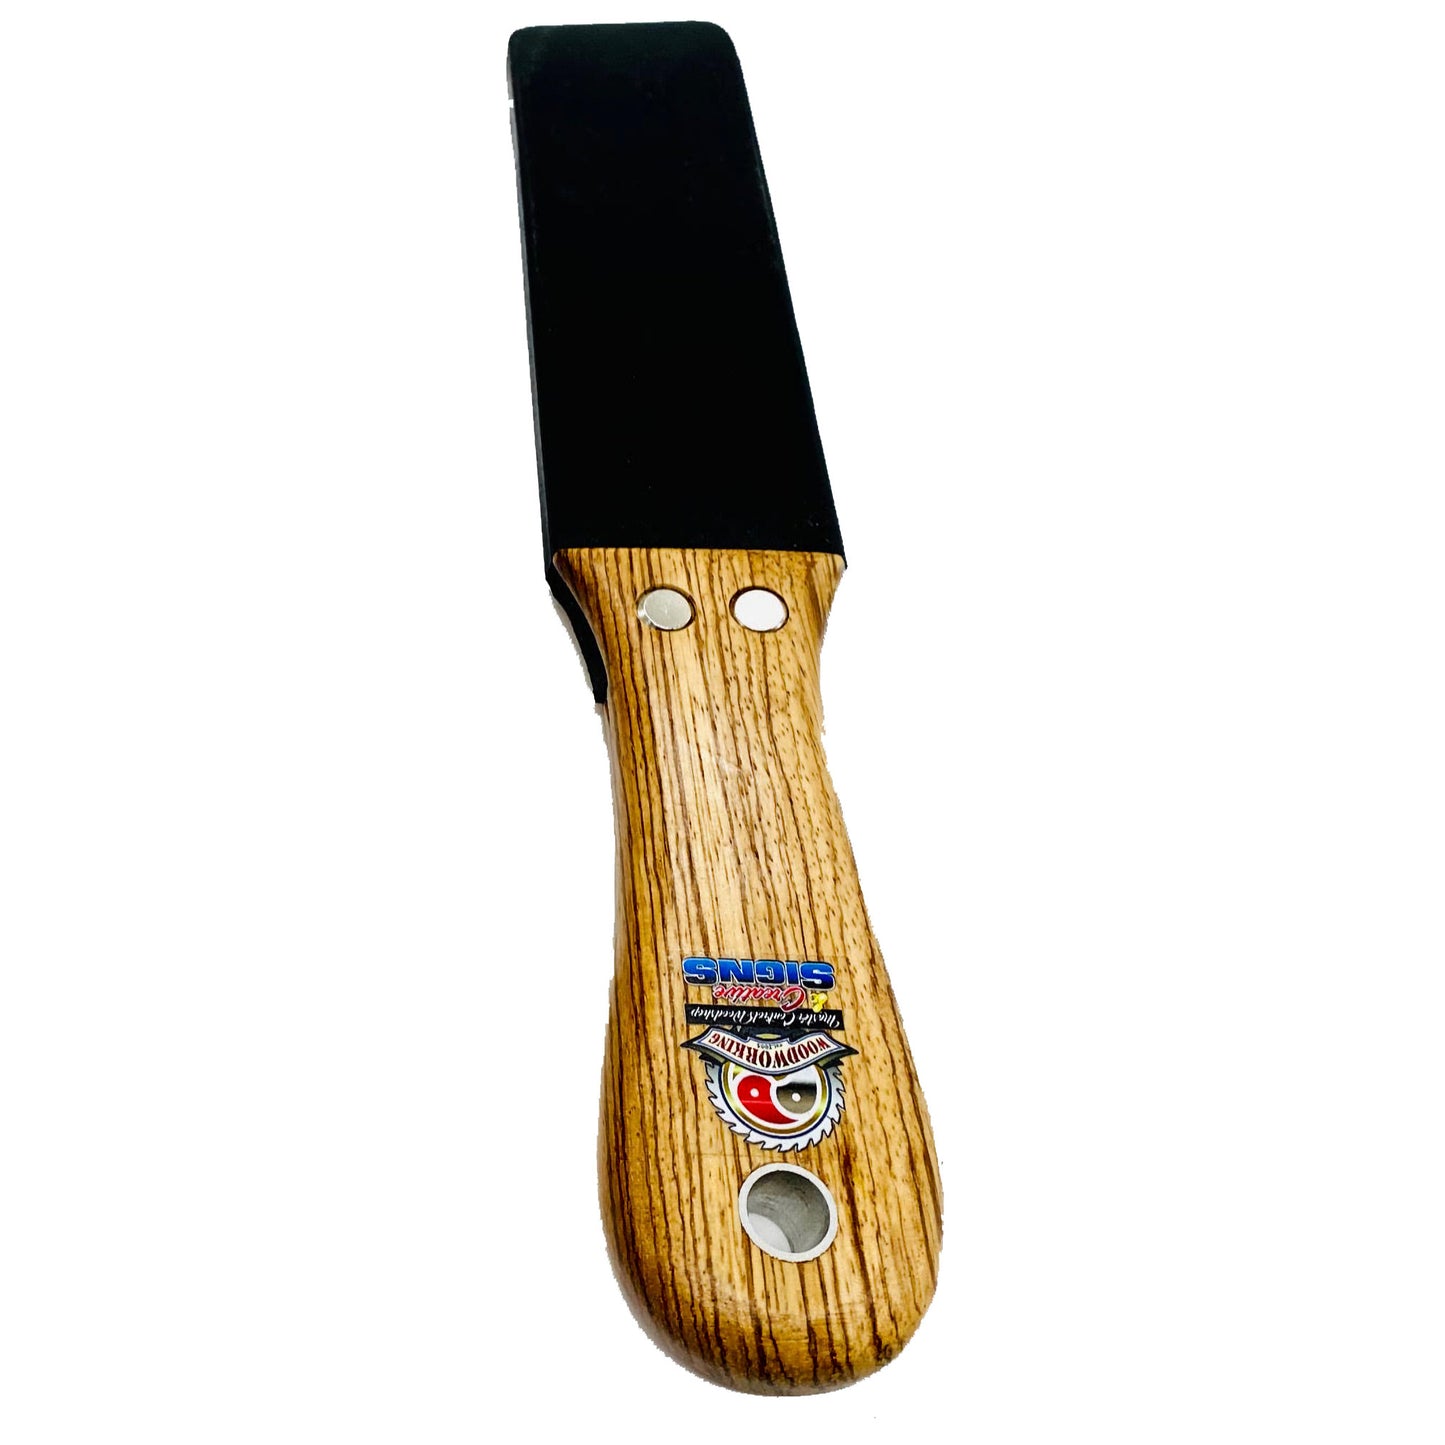 Short Rubber Slapper Spanking Paddle, rubber strap, barber strap, spanking paddle, paddle, strap, bdsm, impact, punishment, discipline